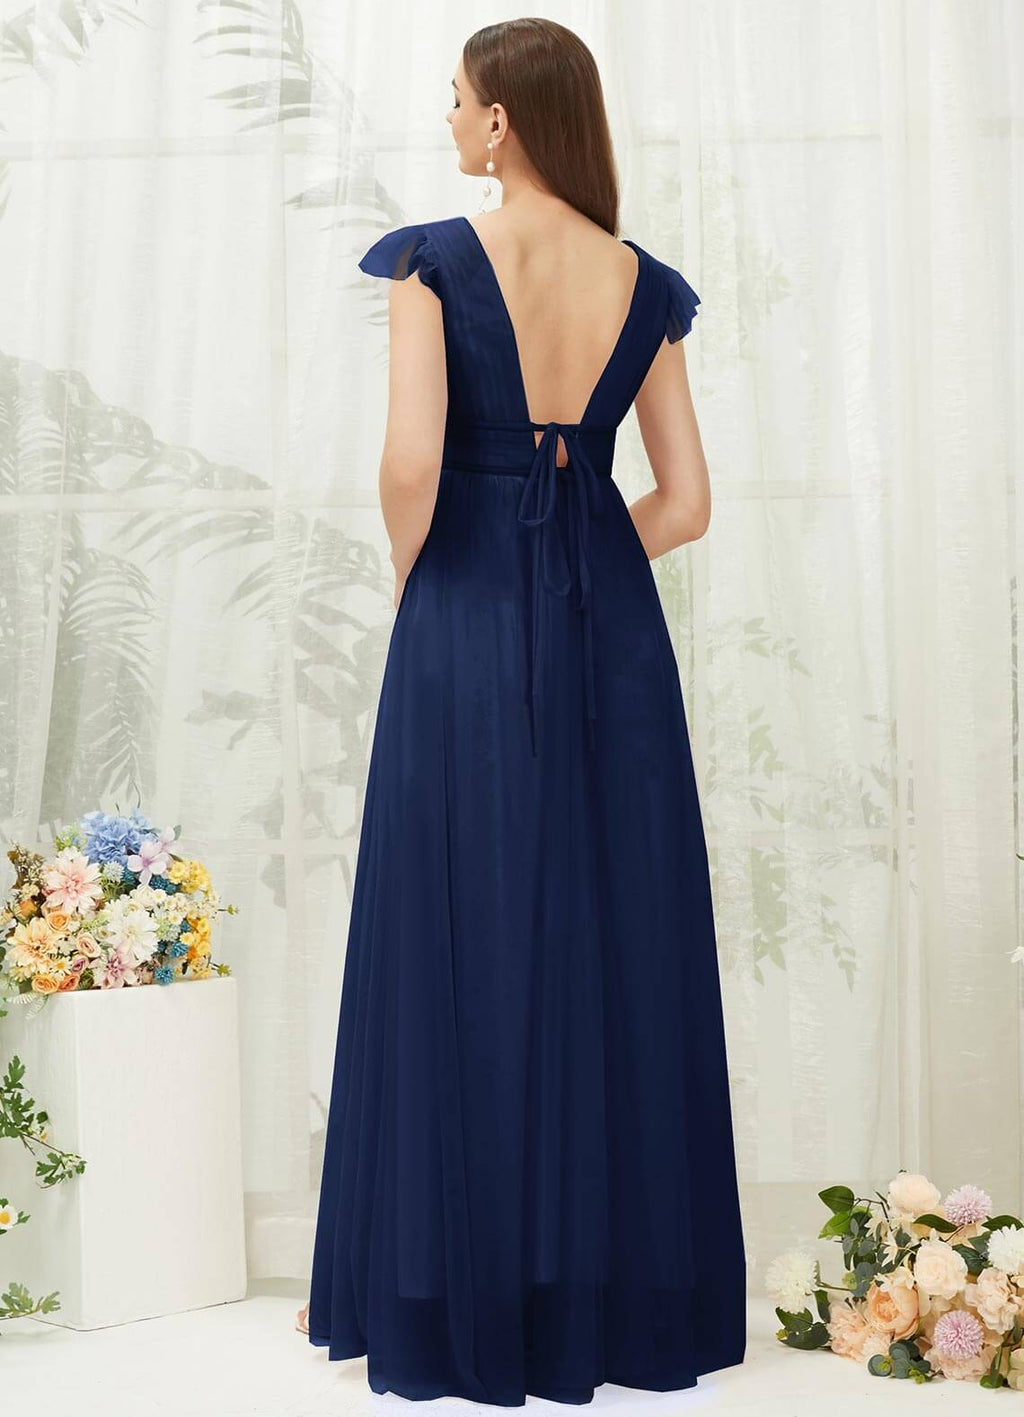 NZ Bridal Navy Blue Backless Floor Length Tulle bridesmaid dresses R0410 Collins a